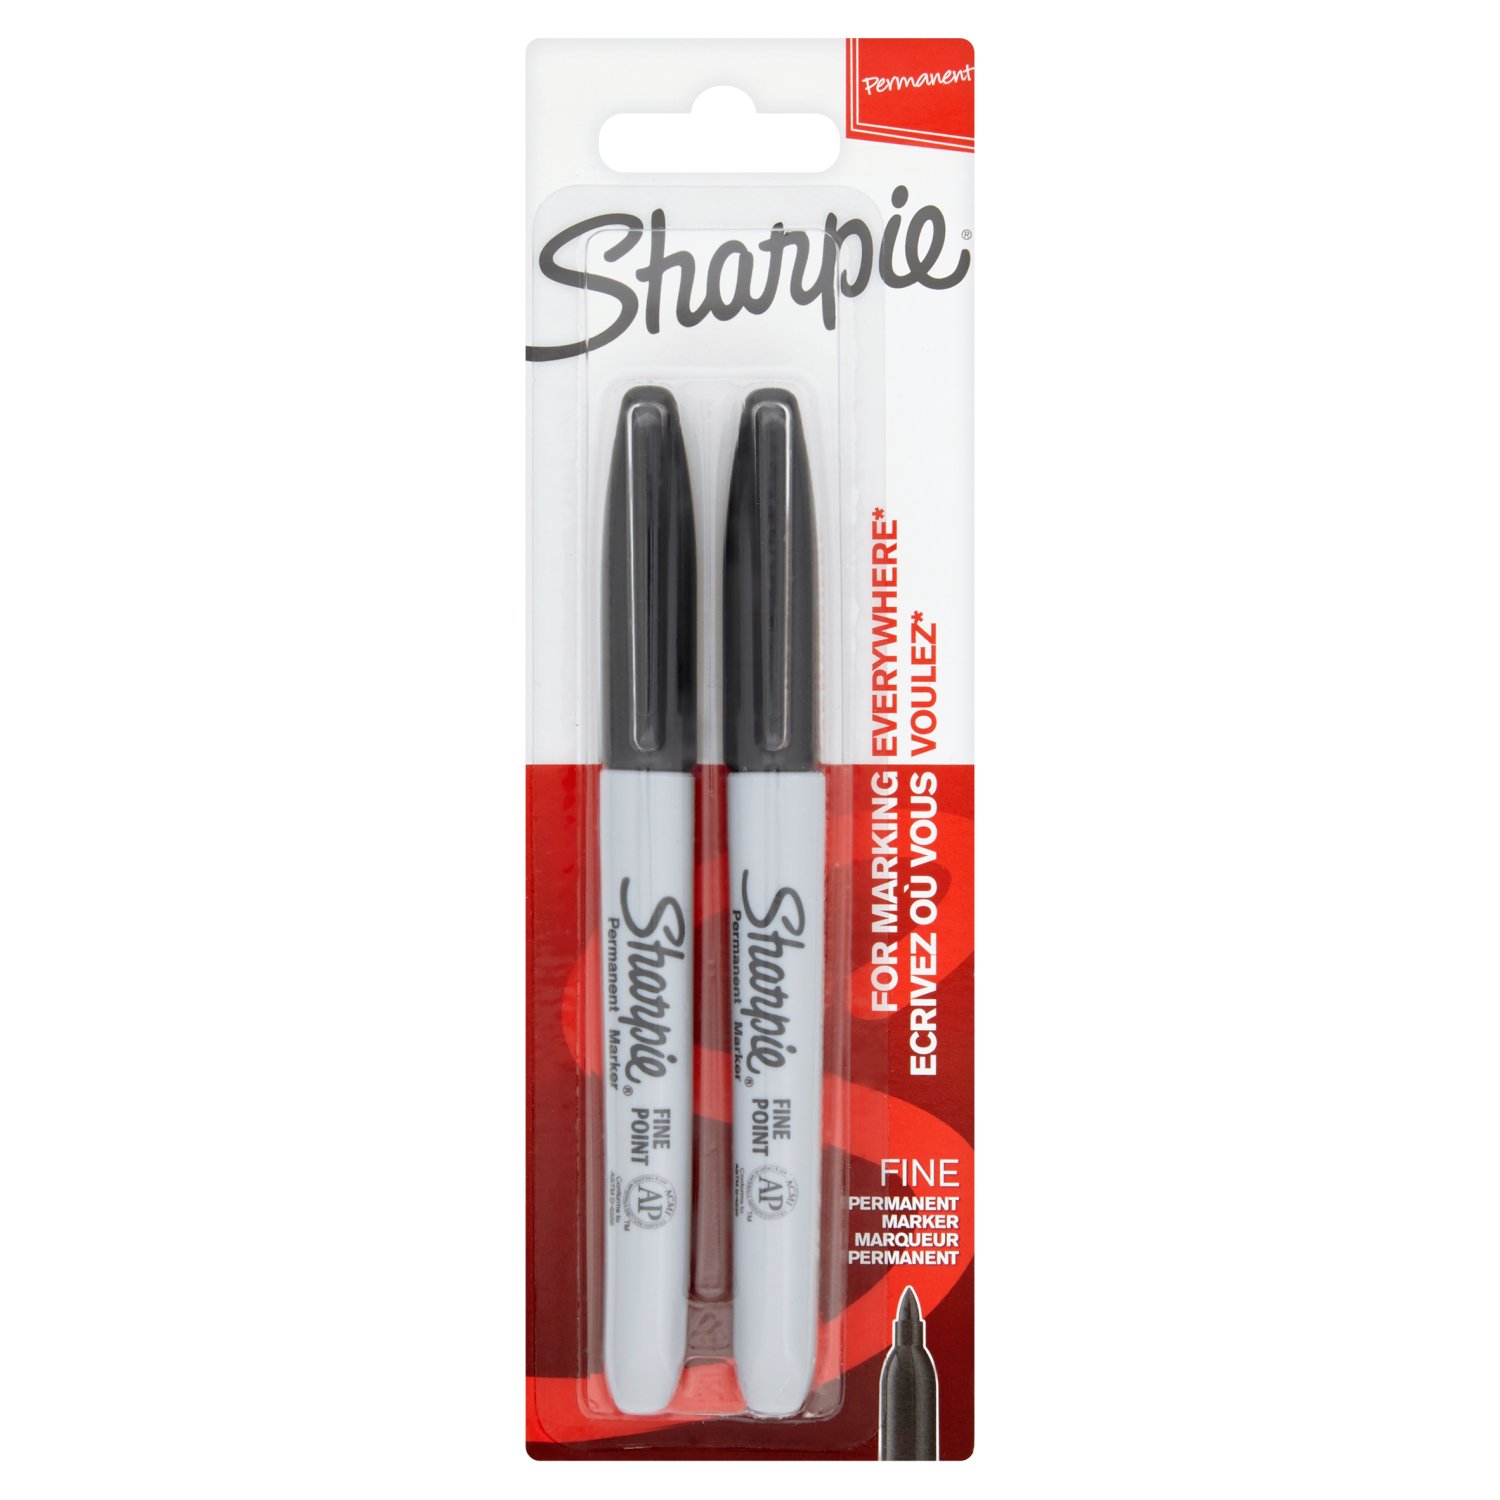 Sharpie Black Permanent Marker Black 2 Pack (1 Piece)